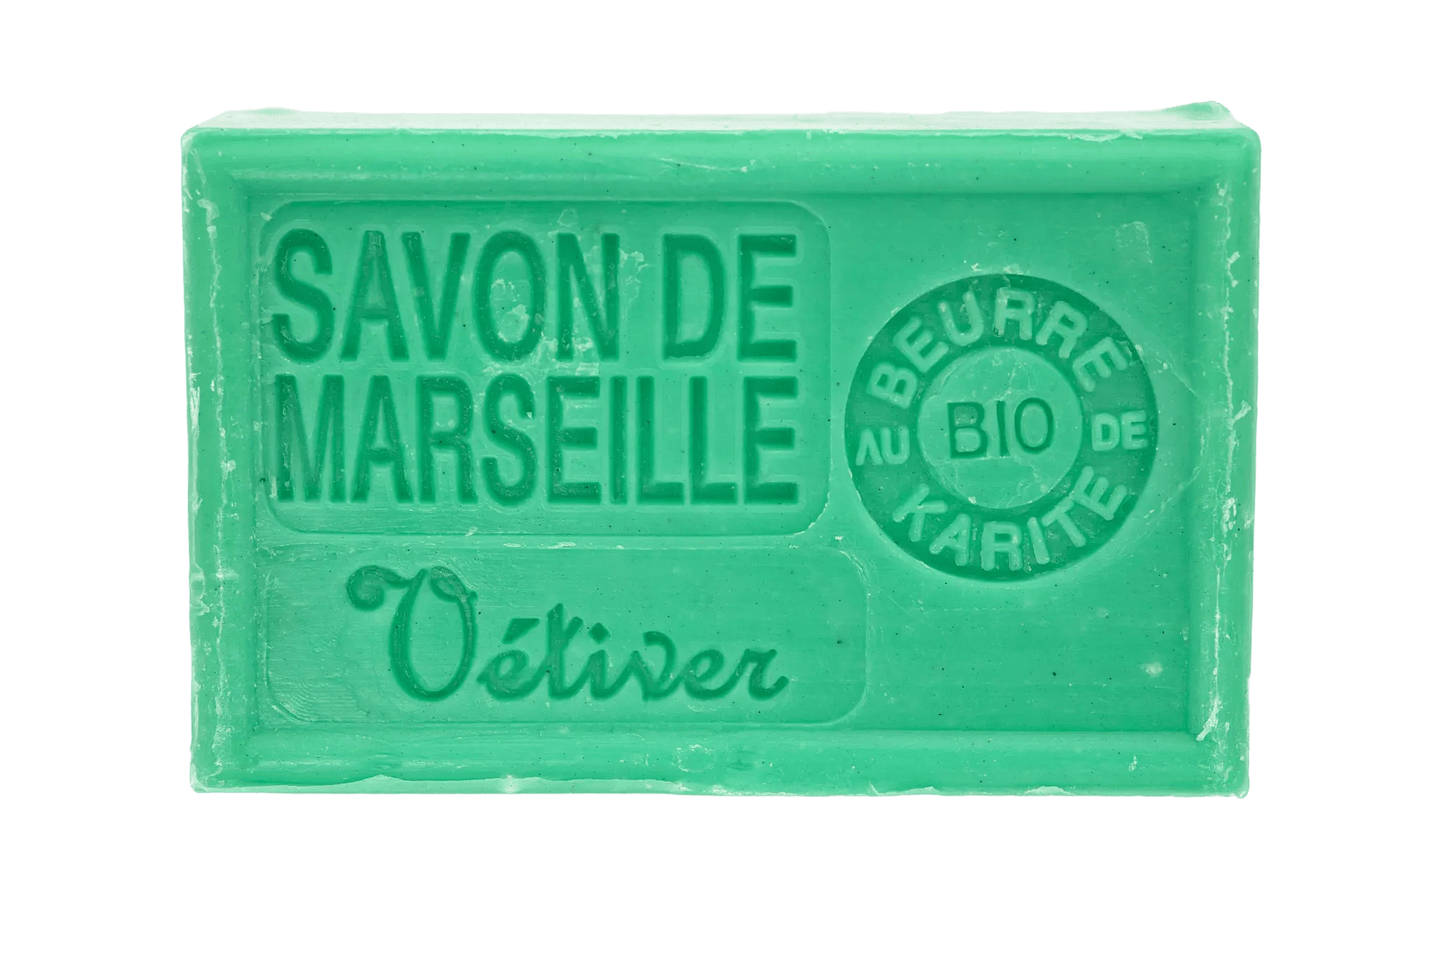 Savon de Marseille parfumé Vétiver 125gr